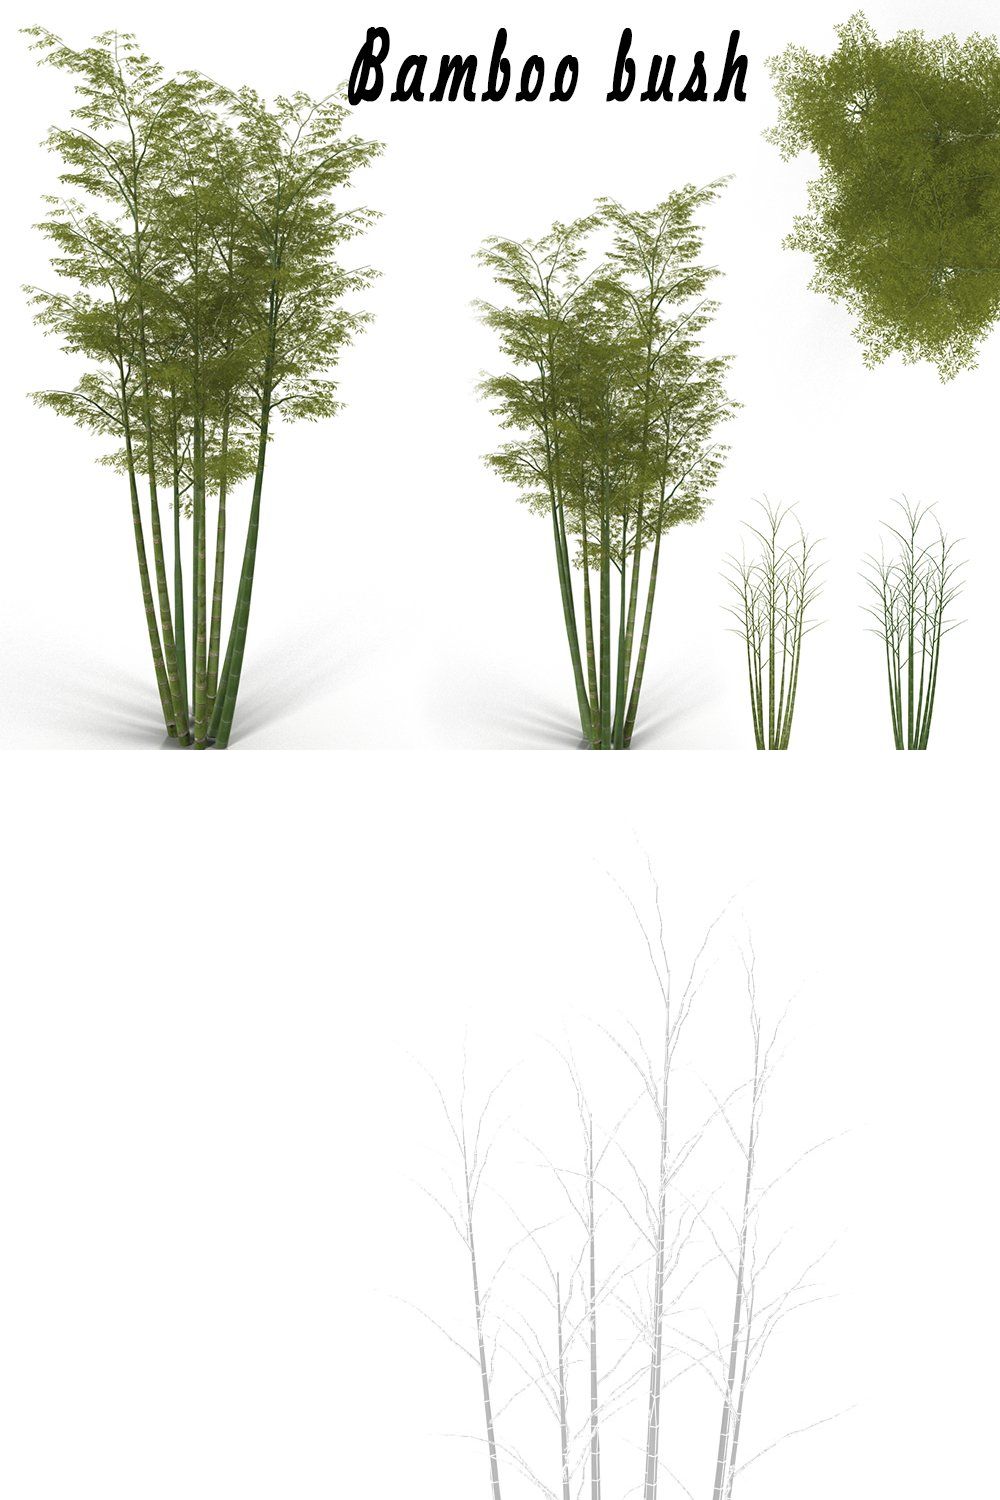 Bamboo bush pinterest preview image.